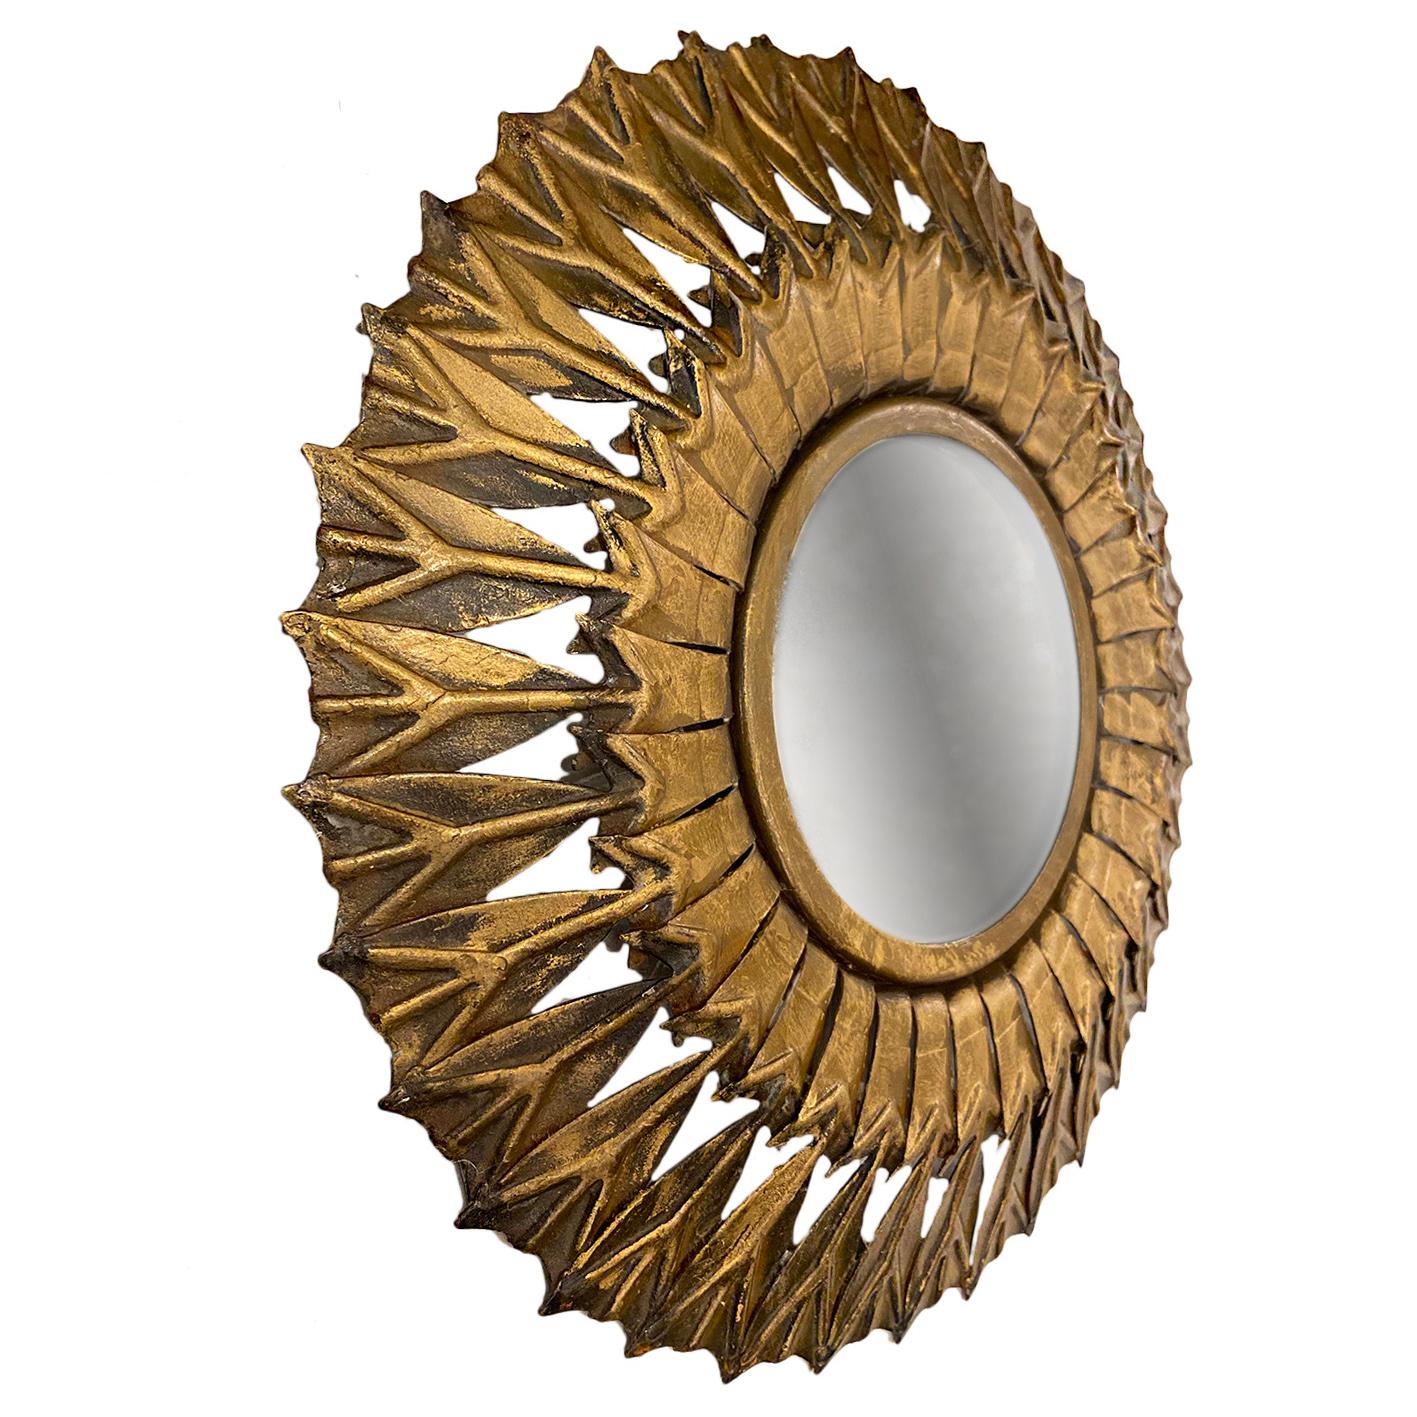 A circa 1950s gilt metal sunburst mirror with original patina.

Measurements:
Diameter 17